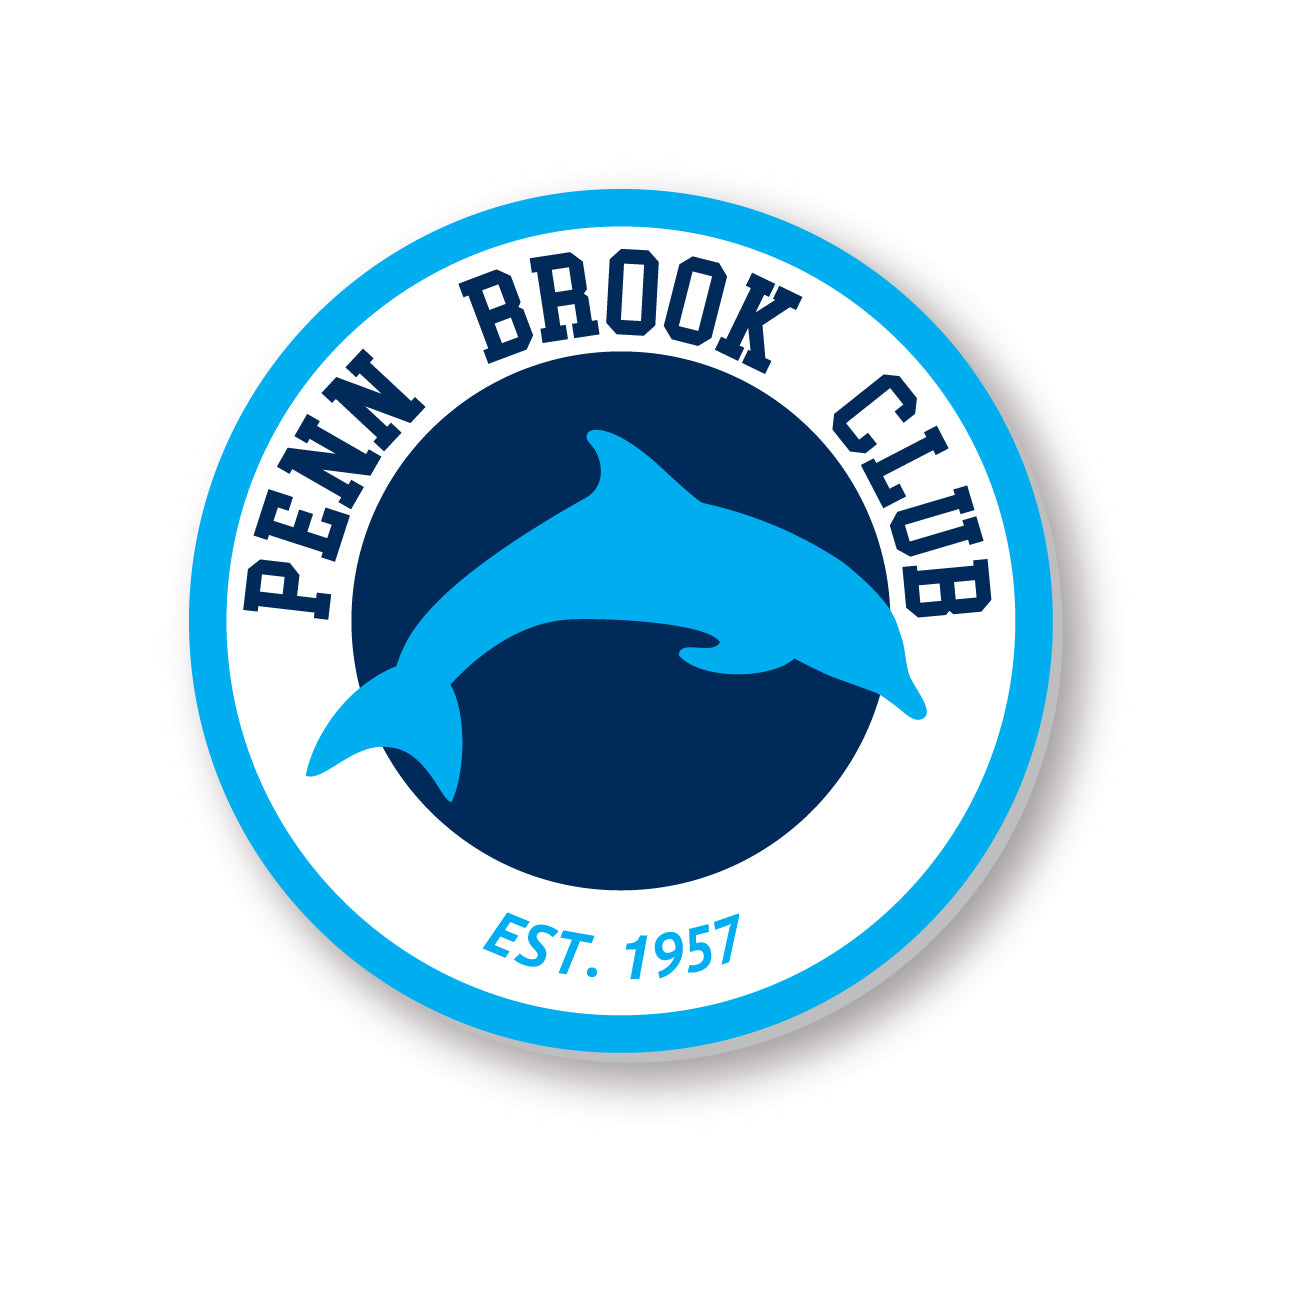 Penn Brook Round Logo Magnet